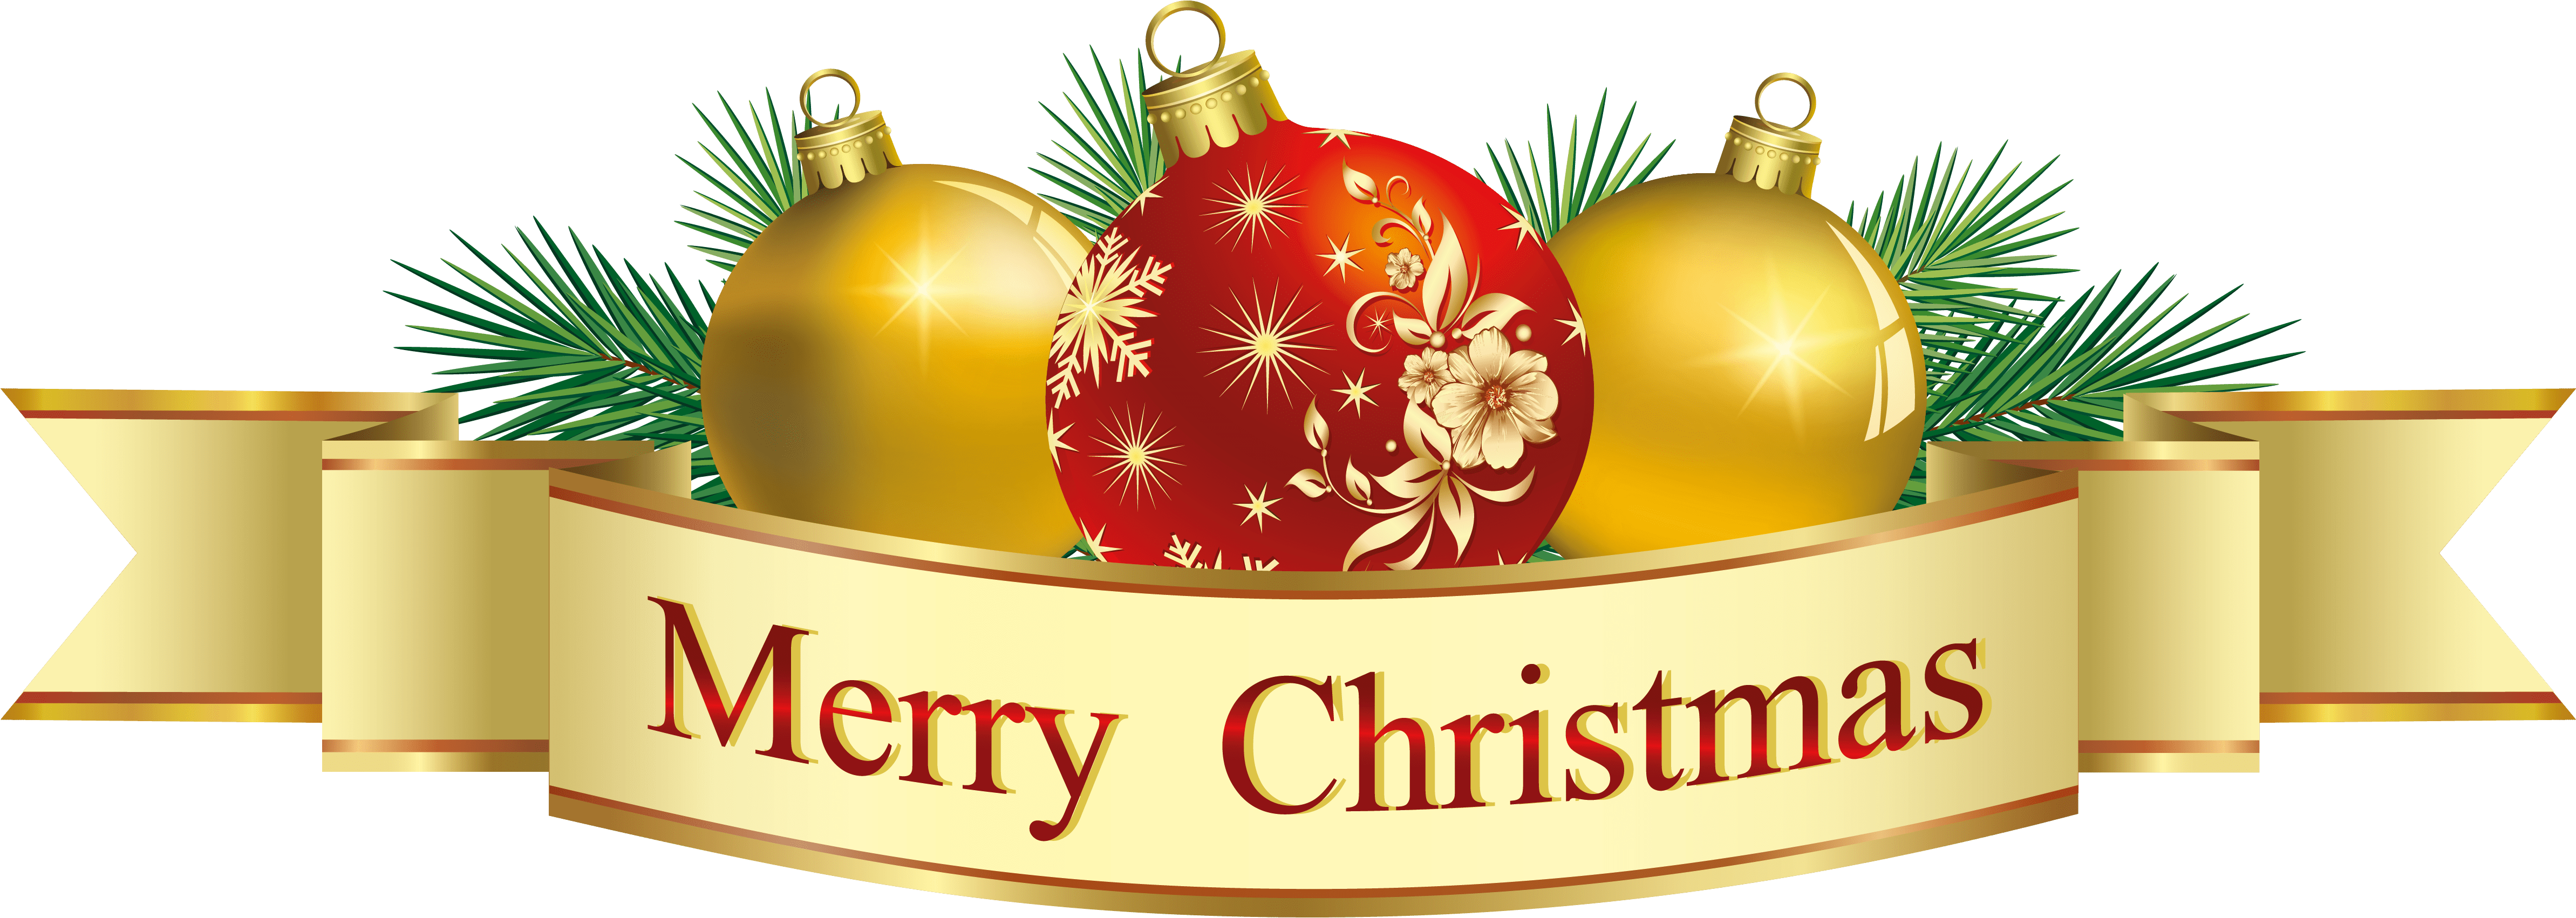 Season's Greetings To Everyone & Happy New Year - Carolina Creek Christian Camp (4987x1886)